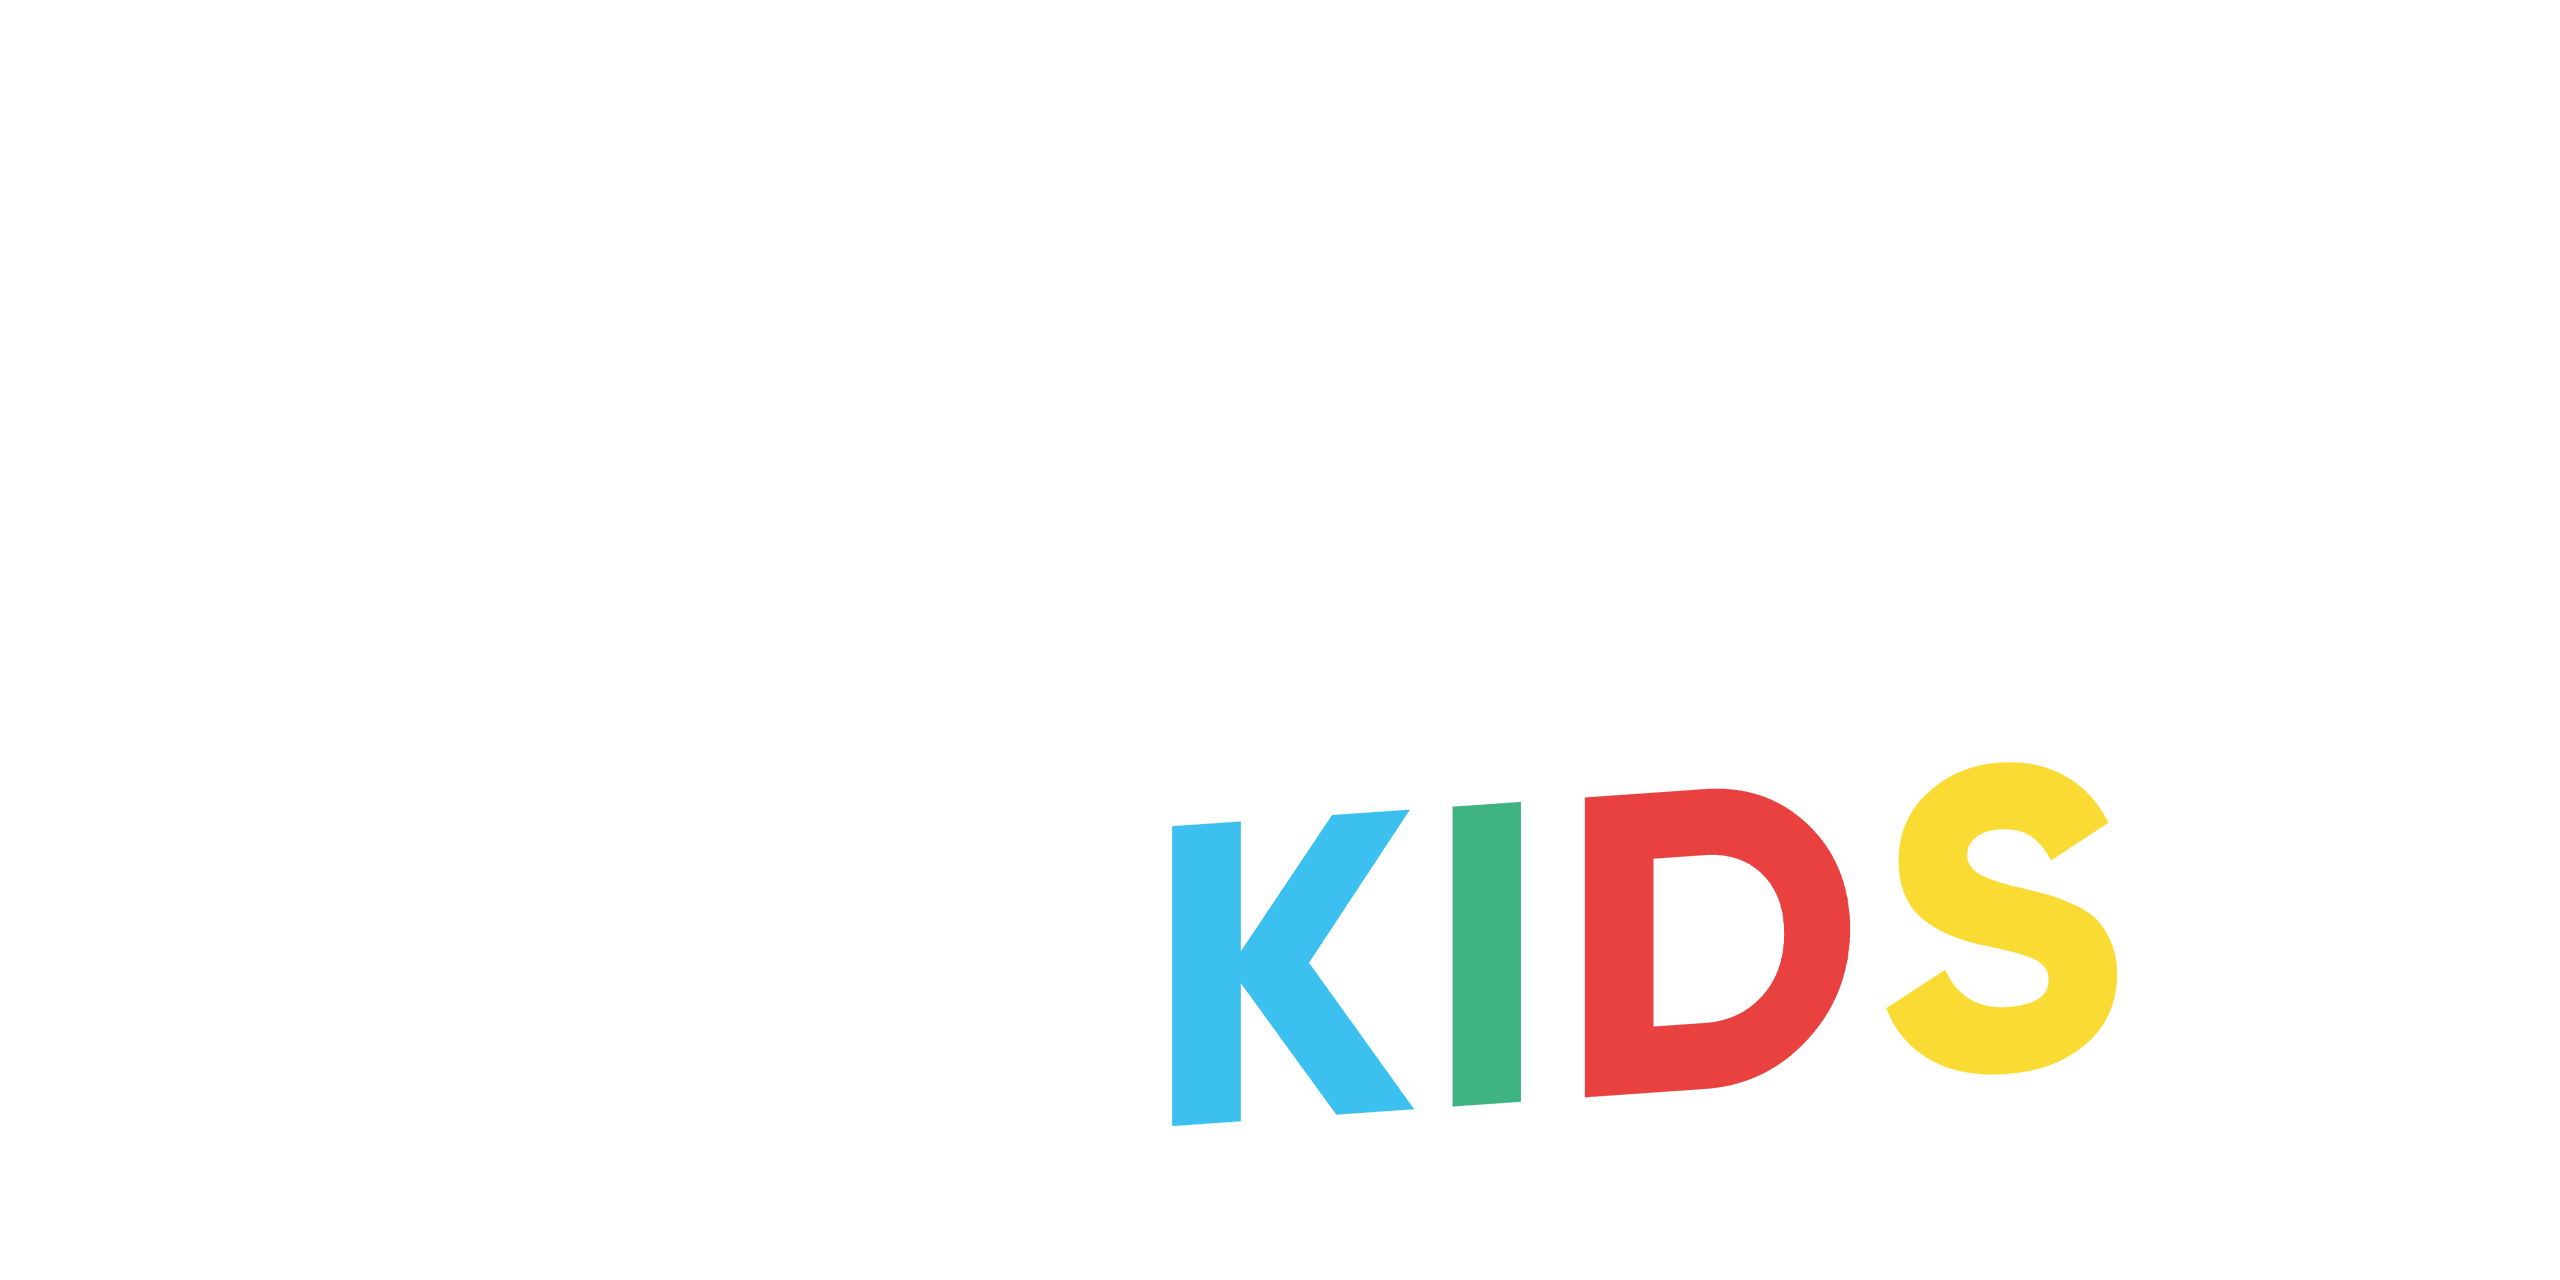 Contact Kids